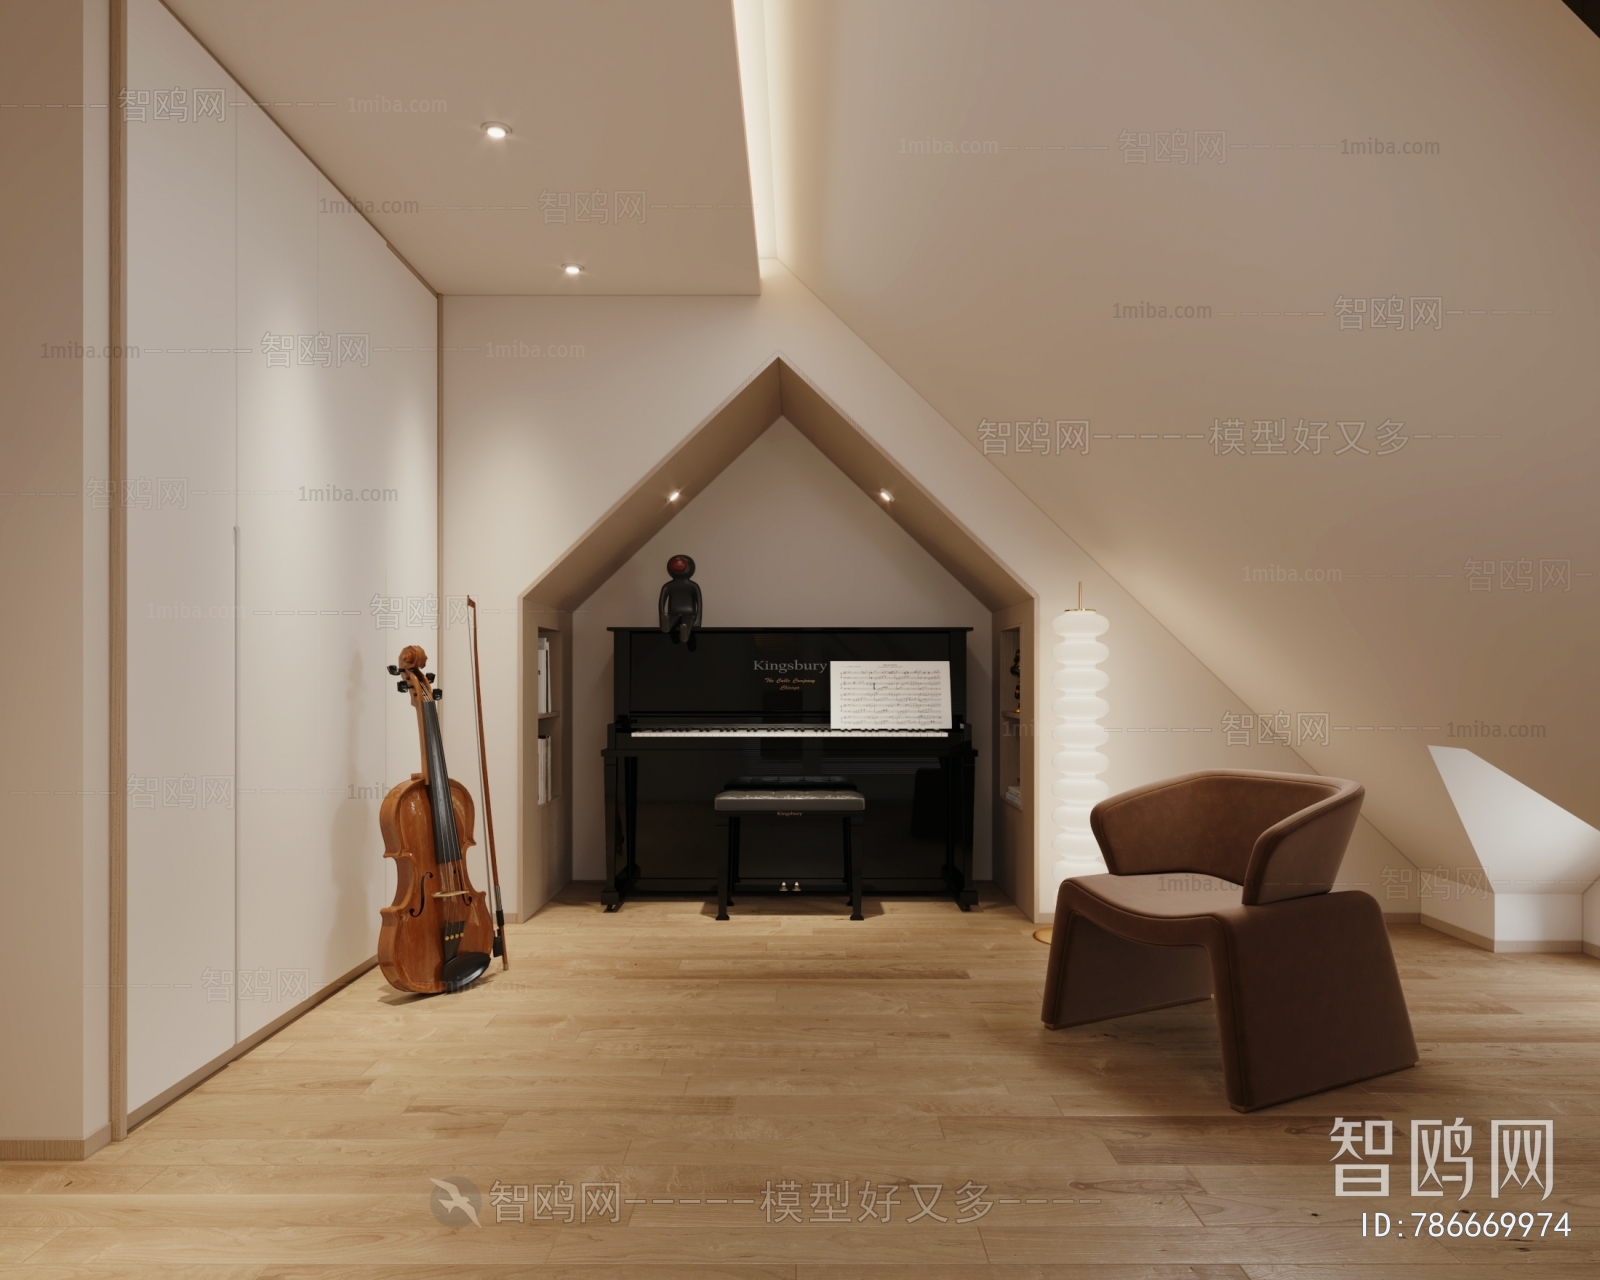 Modern Piano Room